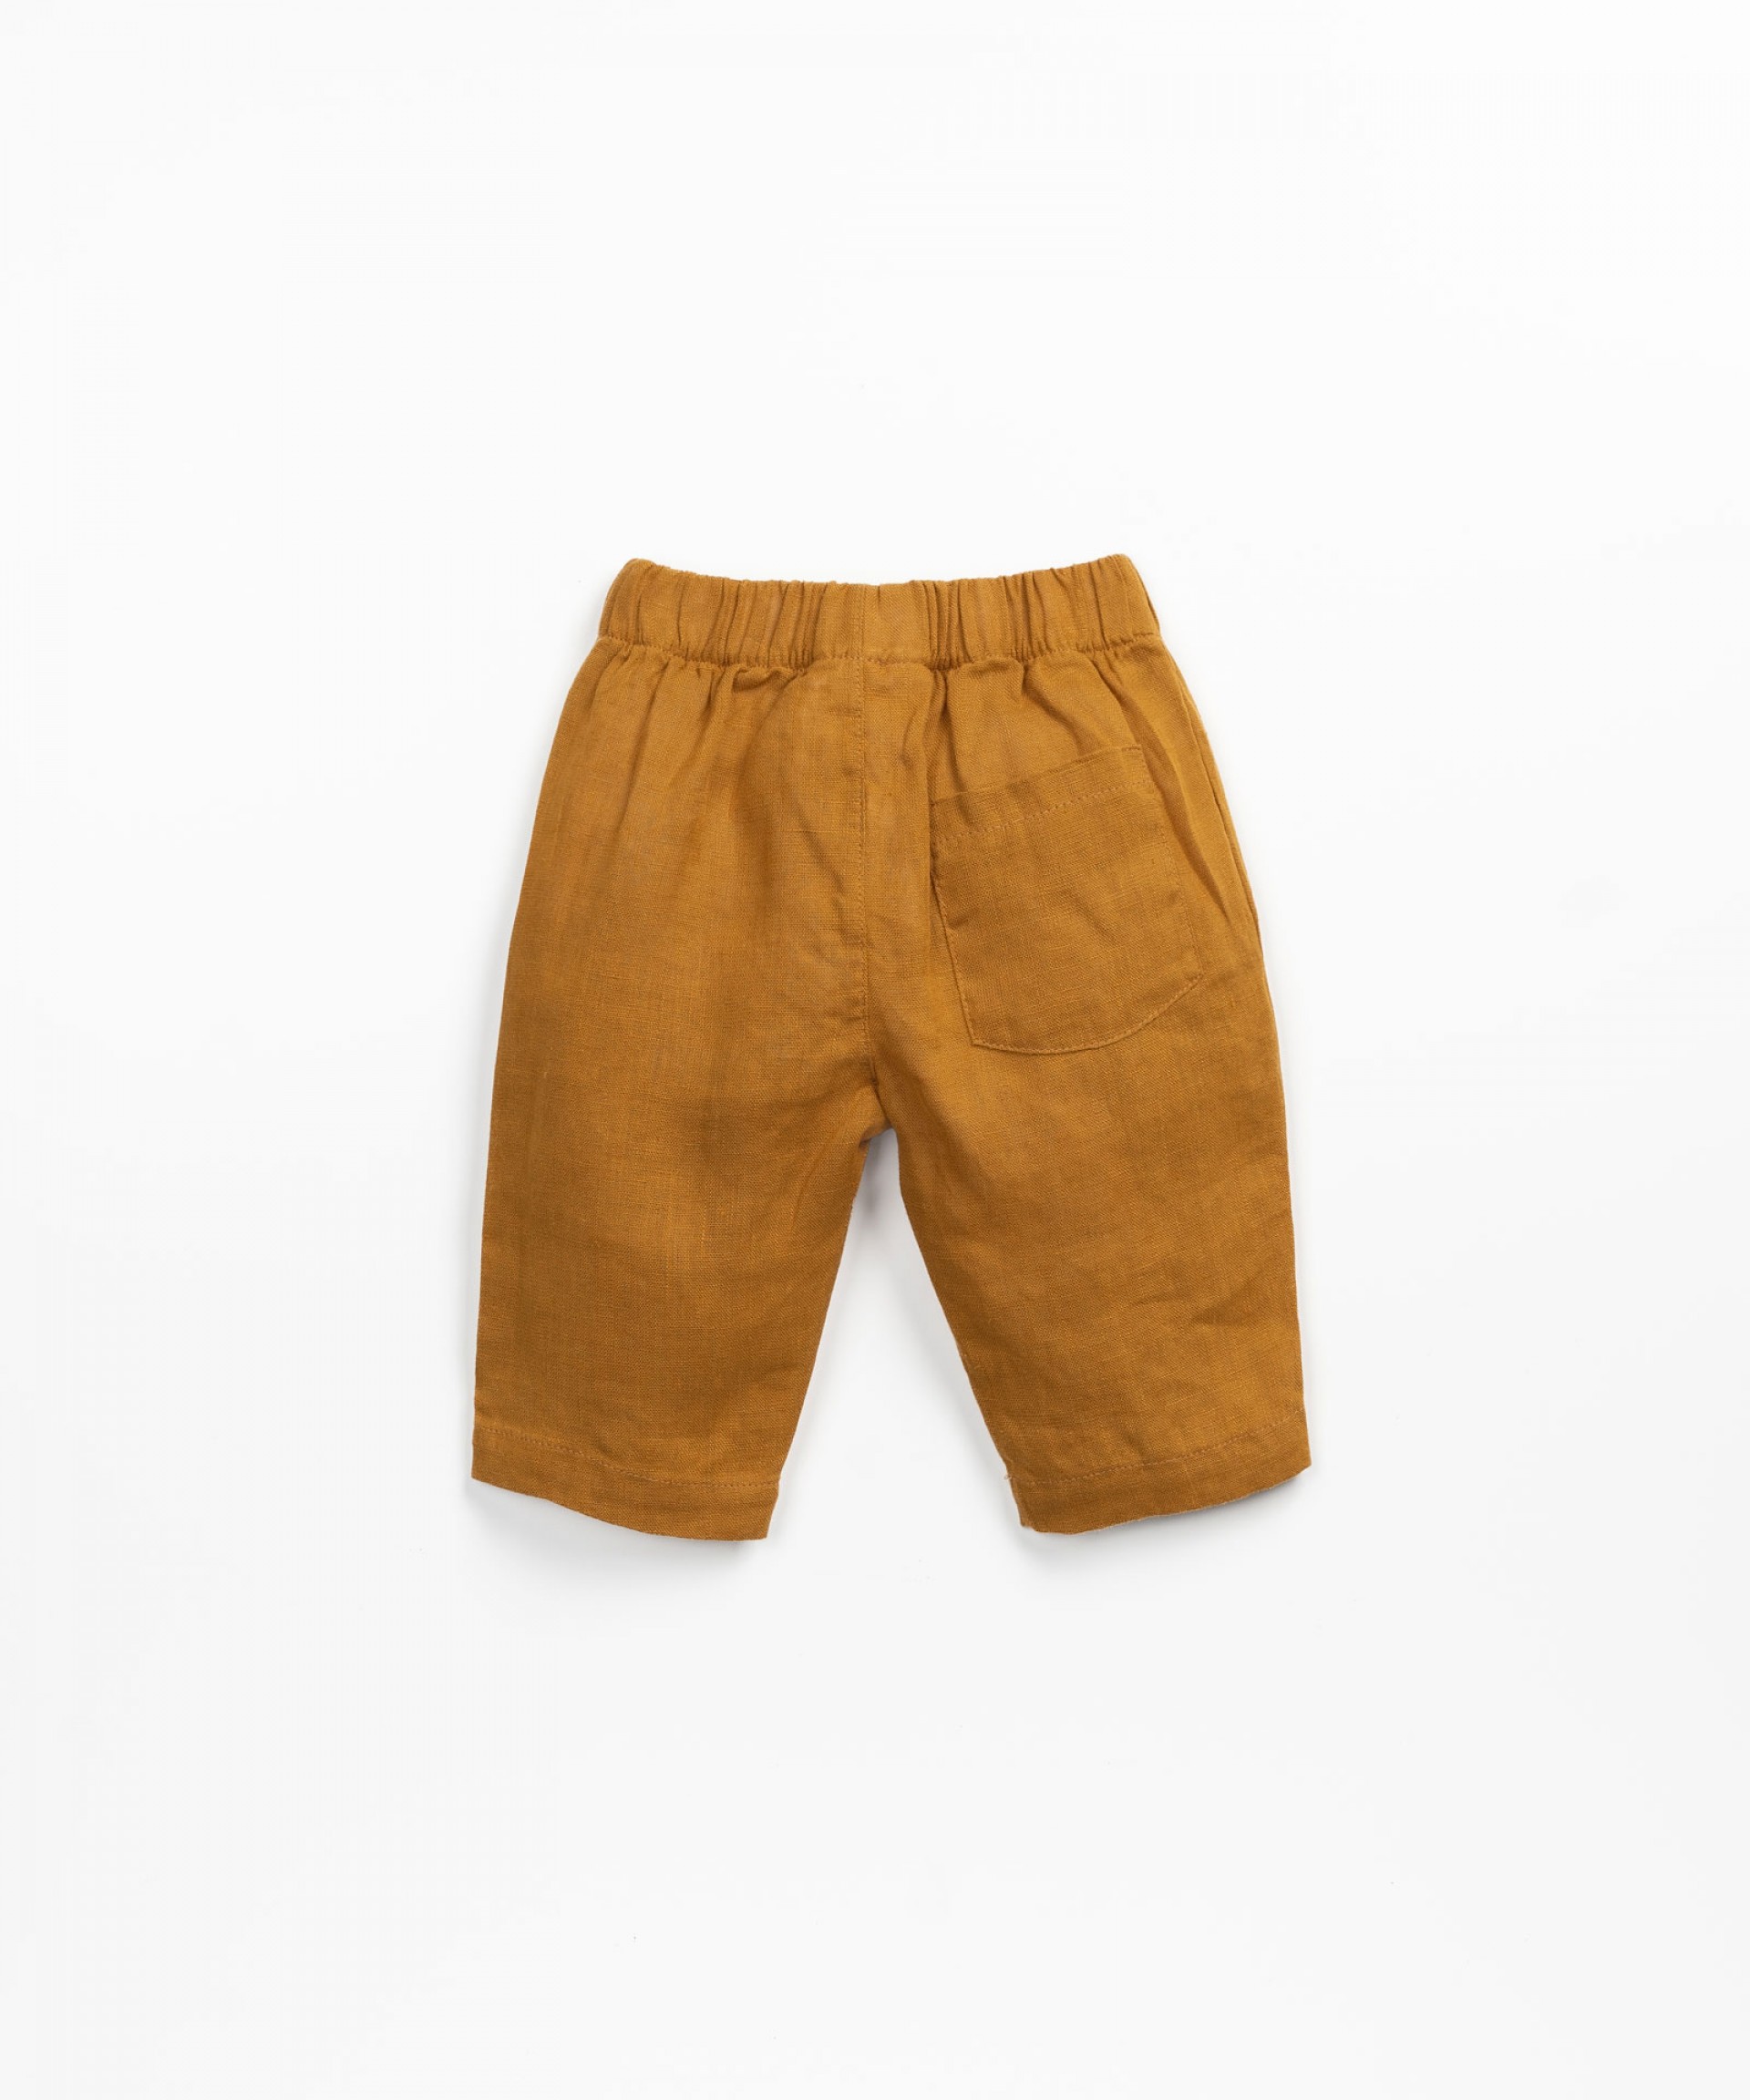 Linen trousers with elastic waist | Textile Art